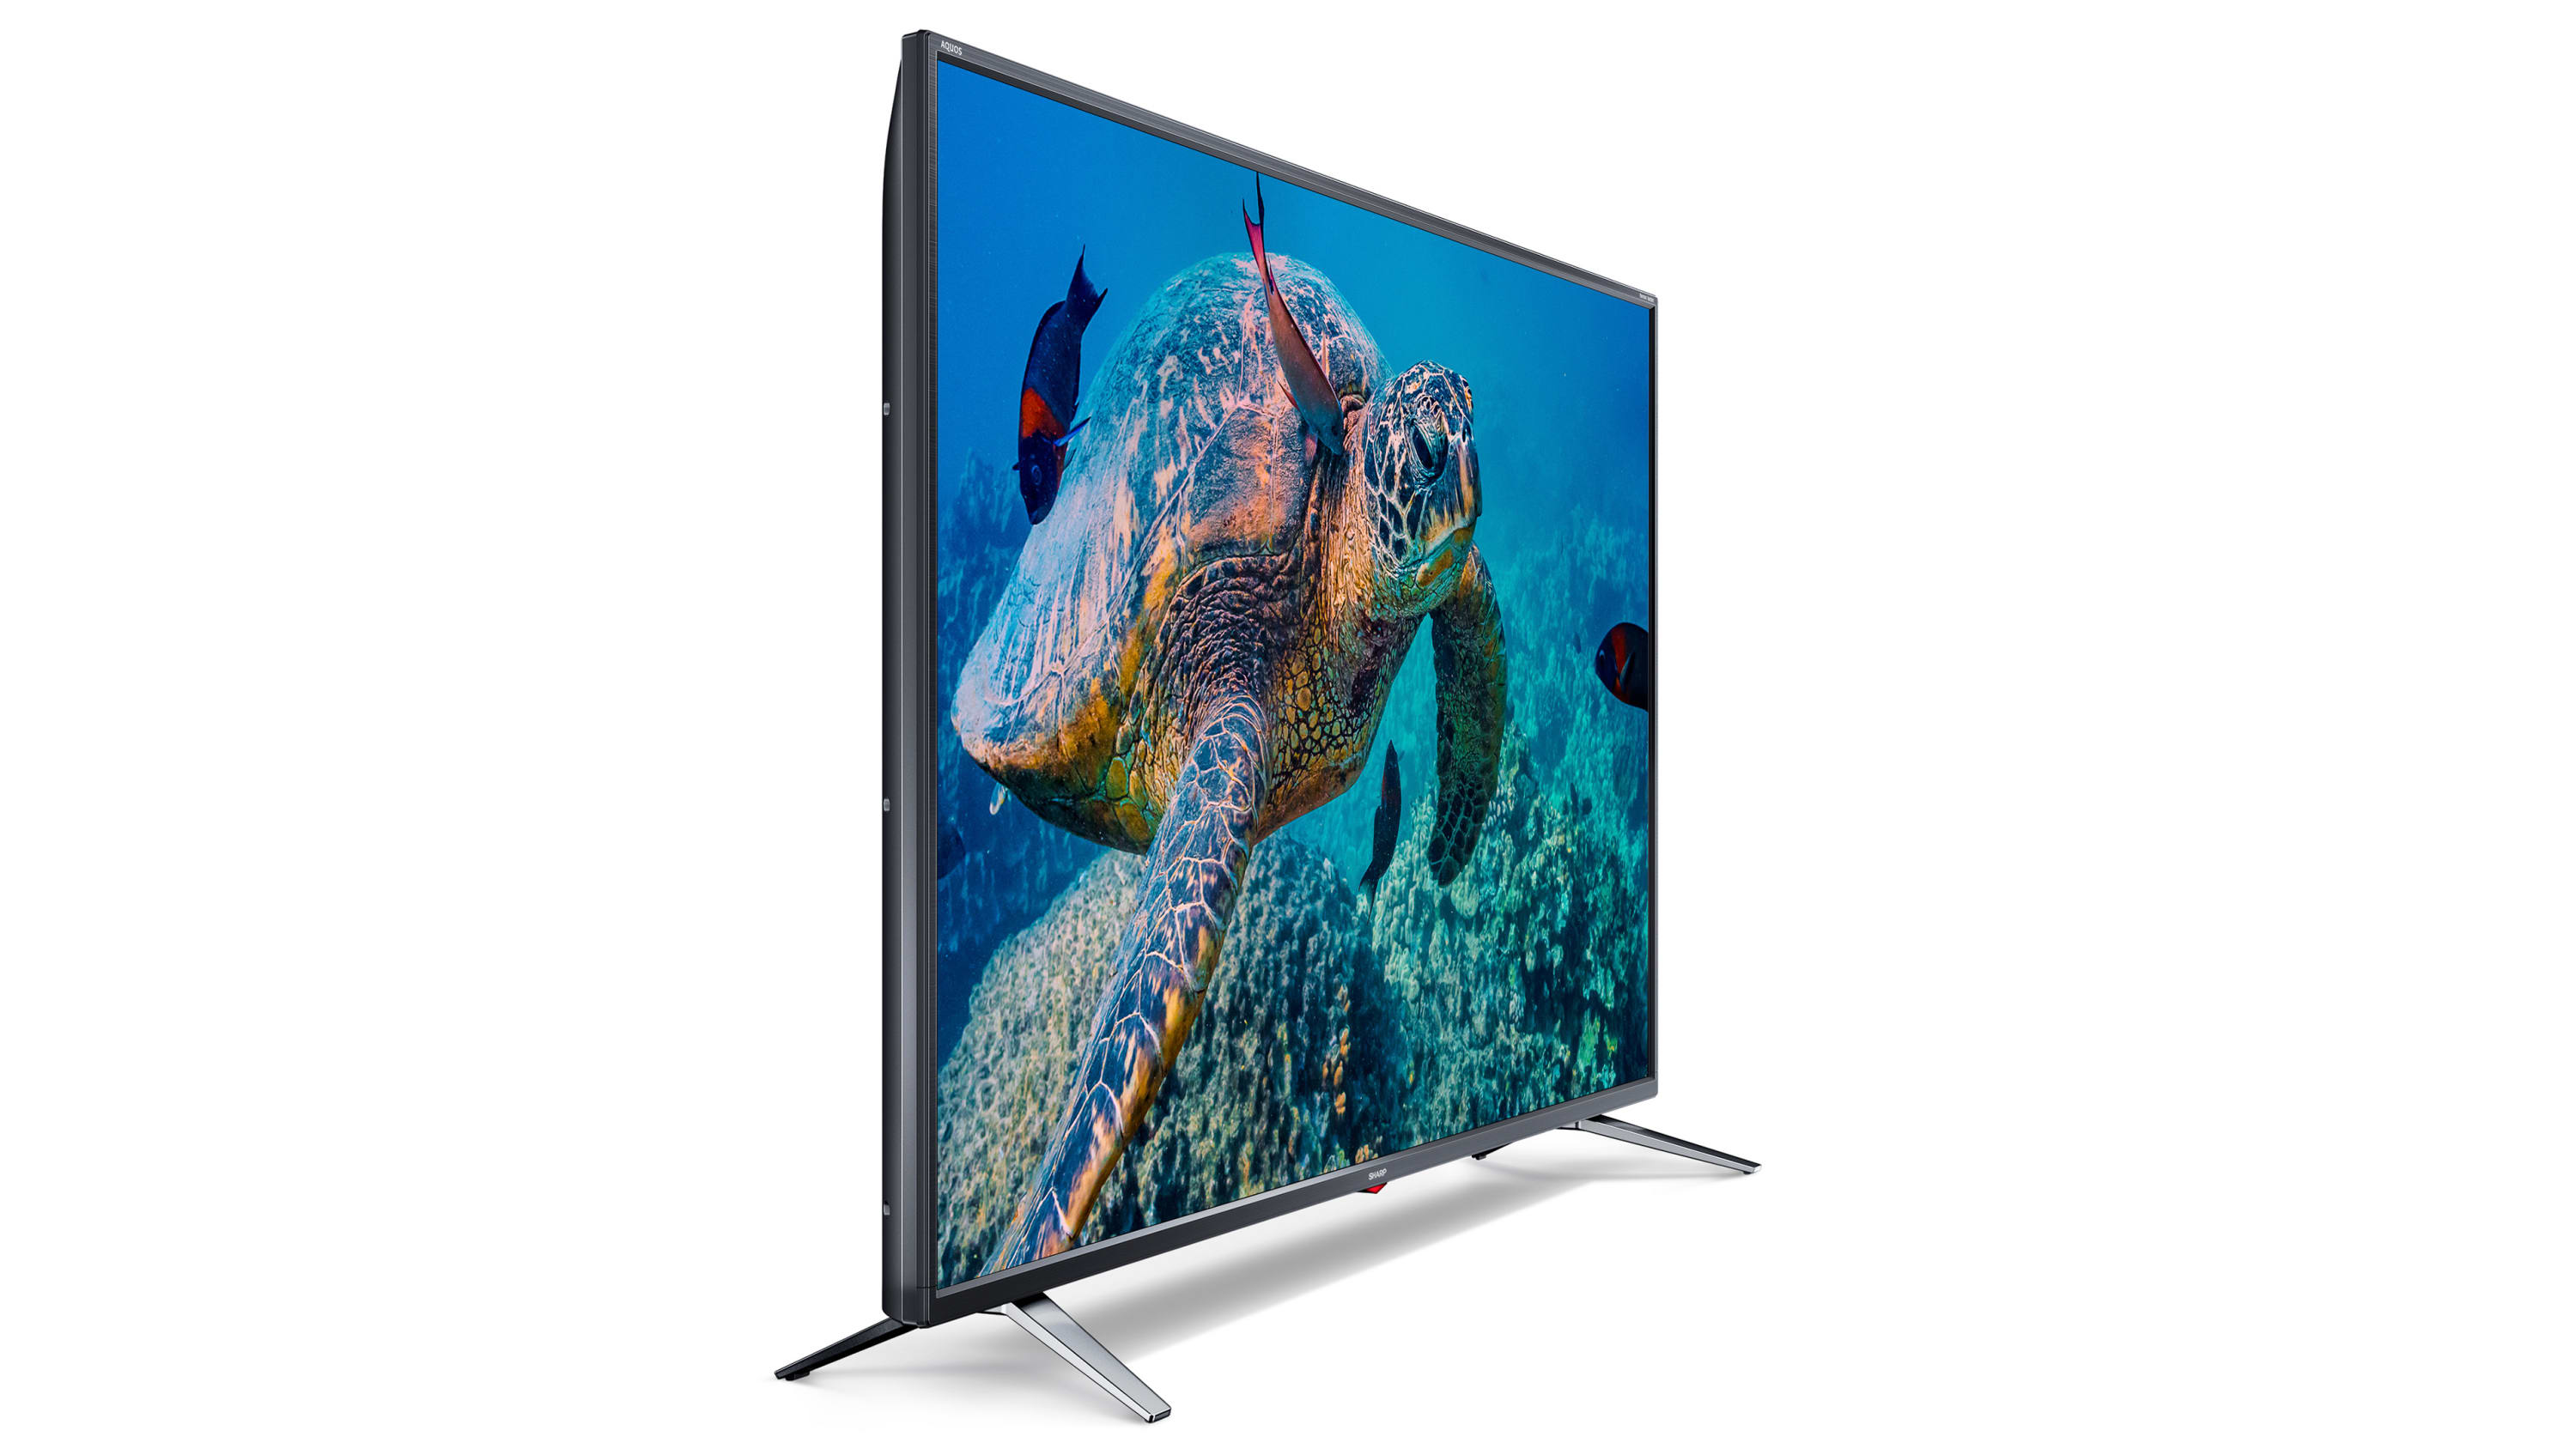 Smart TV HD/Full HD - 49" FULL HD SMART